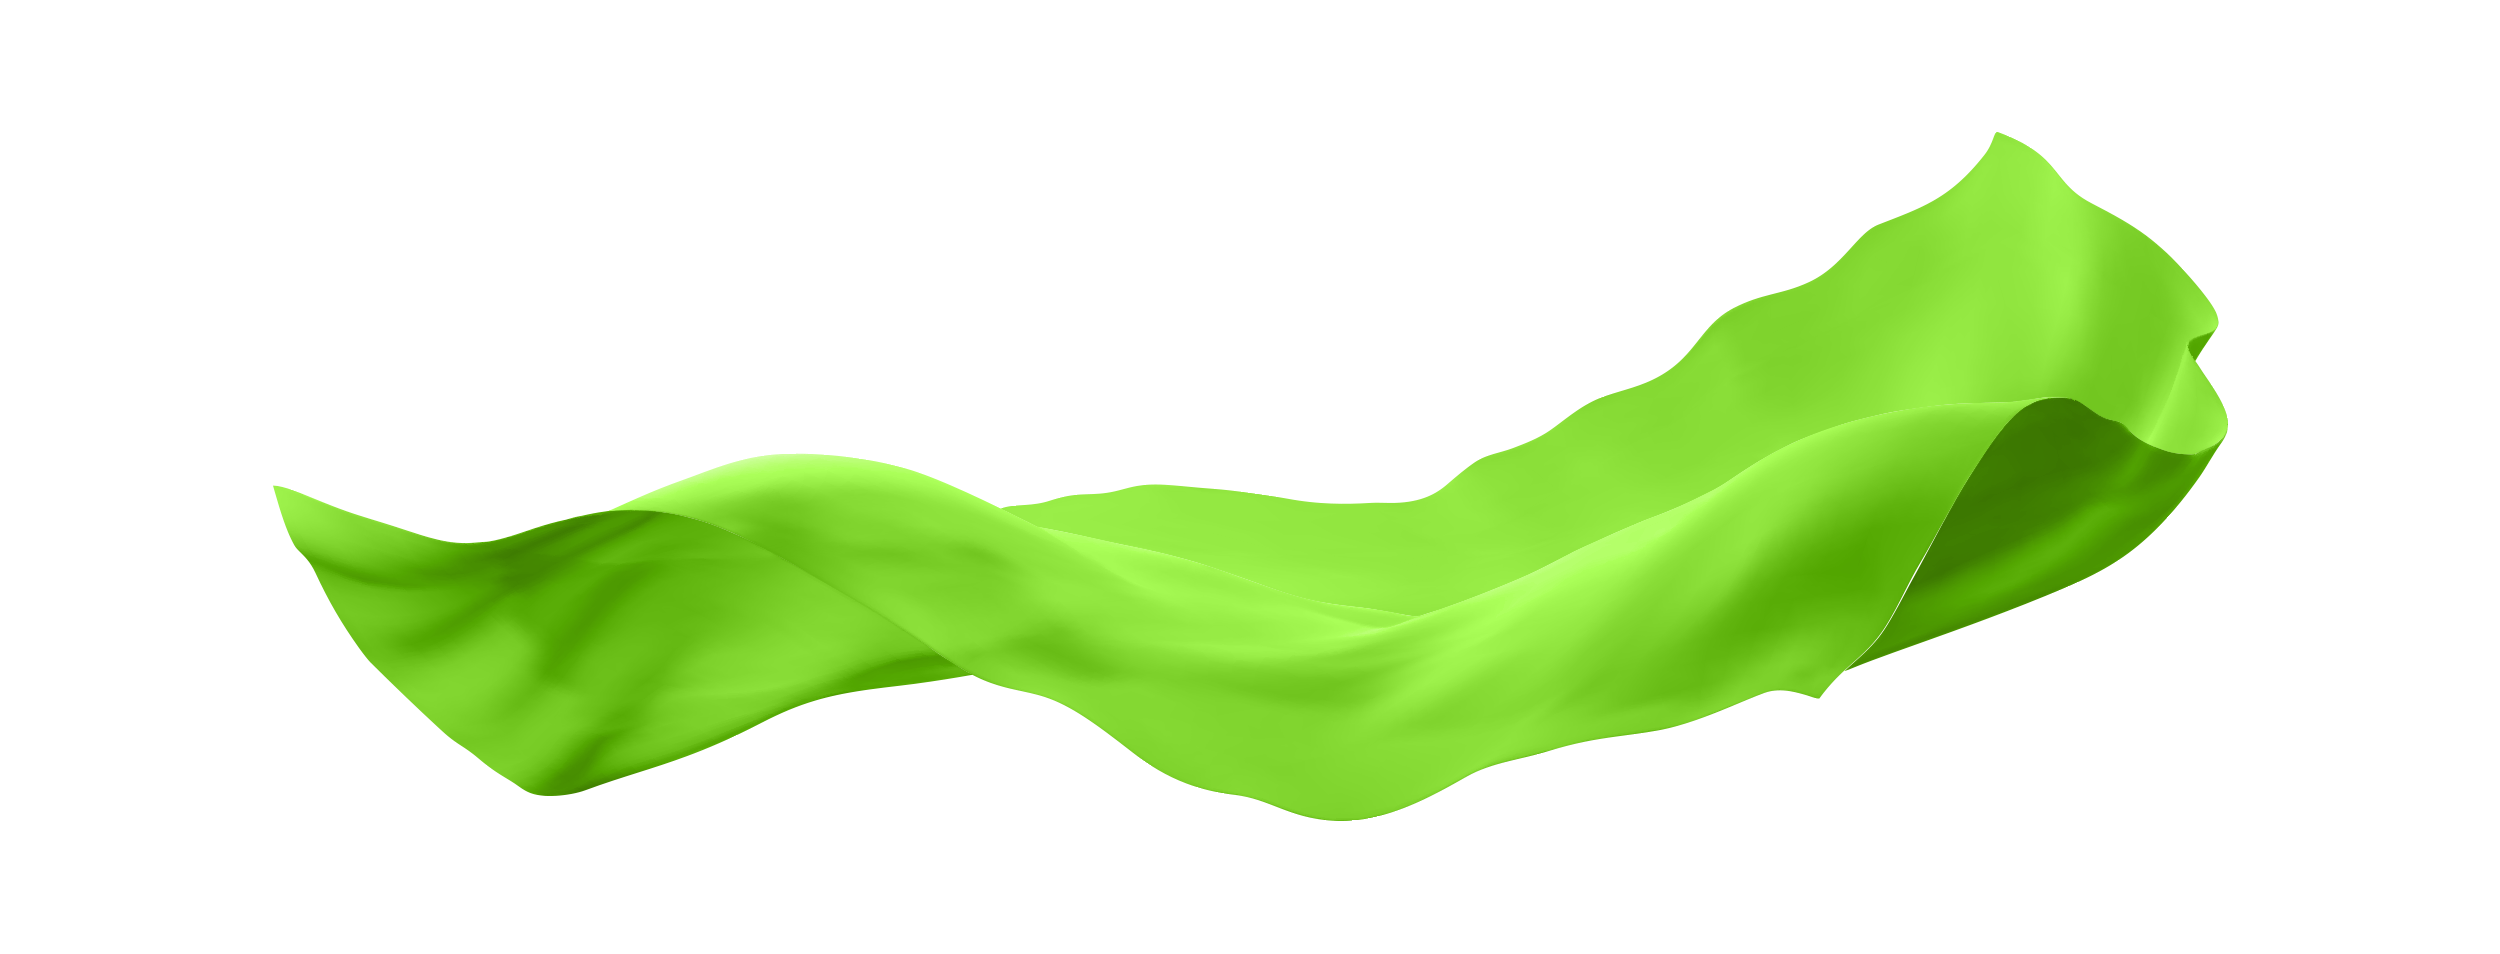 Hellgrünes Farbelement dient als Zierelement